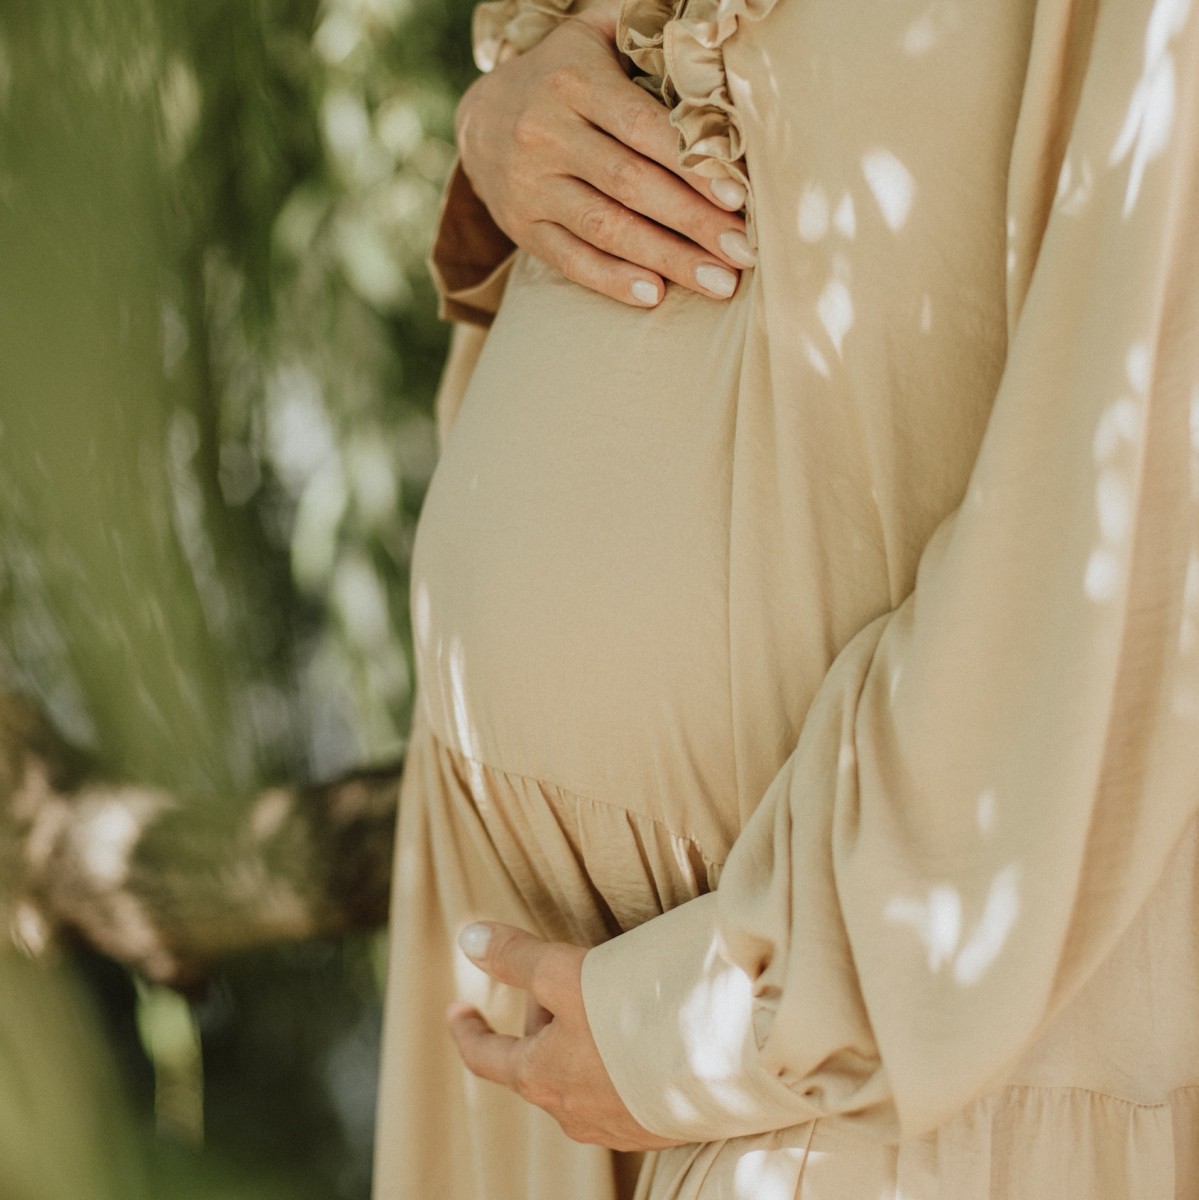 Pregnancy / Post Natal Care